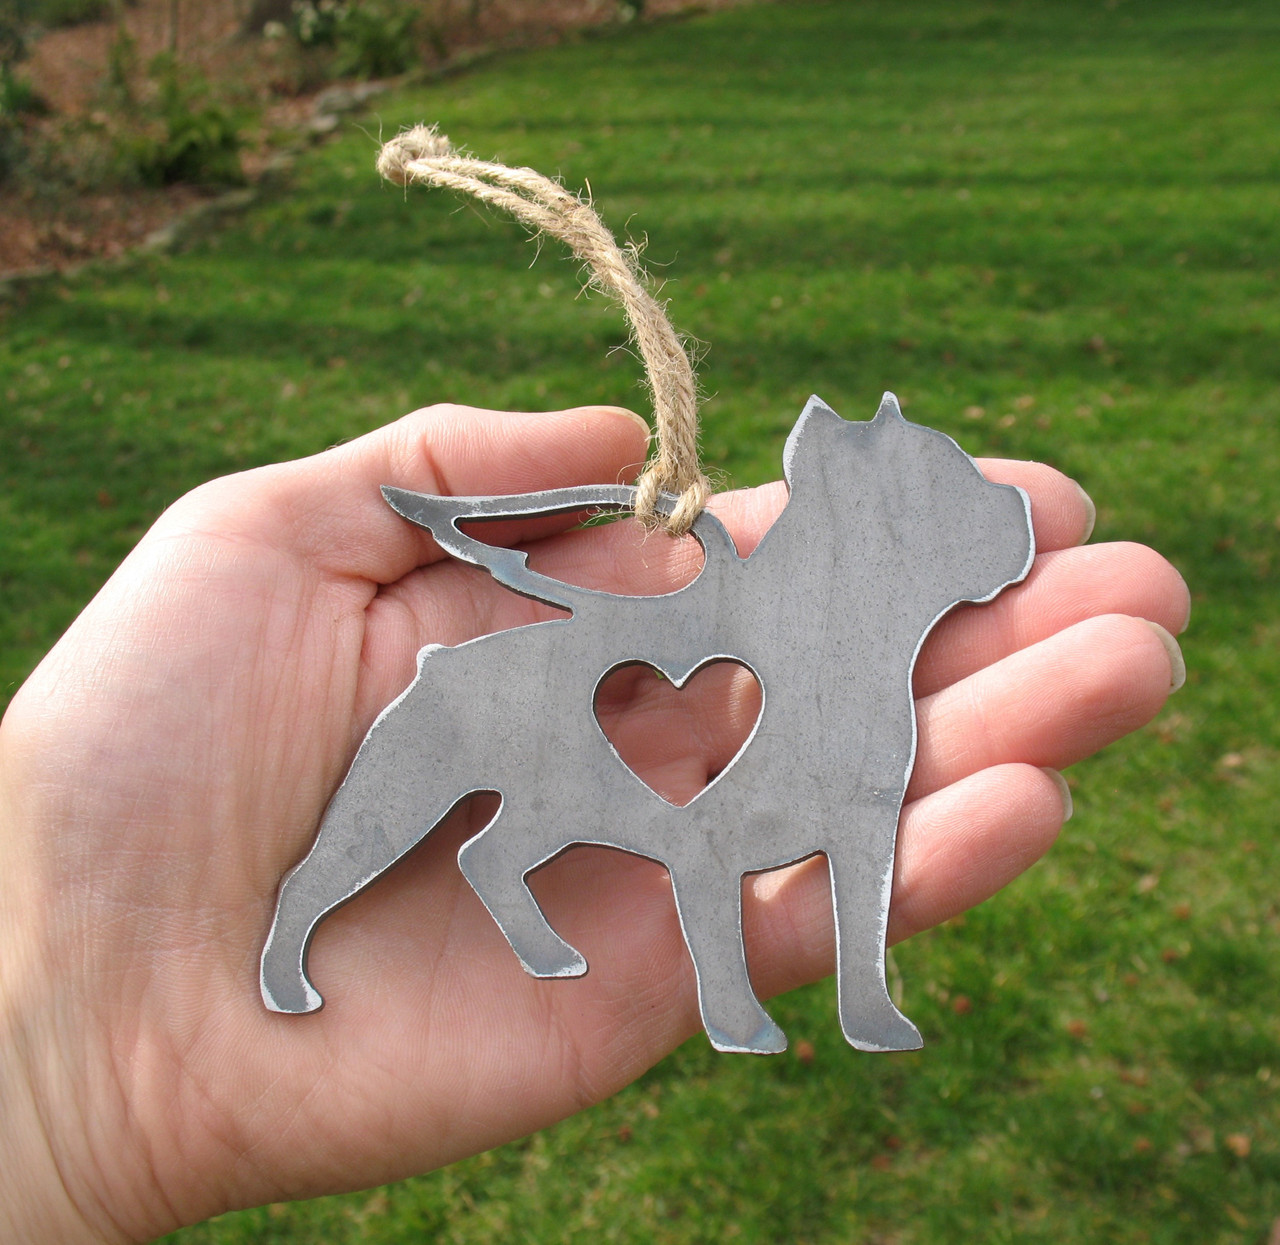 Pit Bull Dog Ornament 2 Pet Memorial W/ Angel Wings - Pet Loss Dog Sympathy Remembrance Gift - Metal Dog Christmas Ornament 